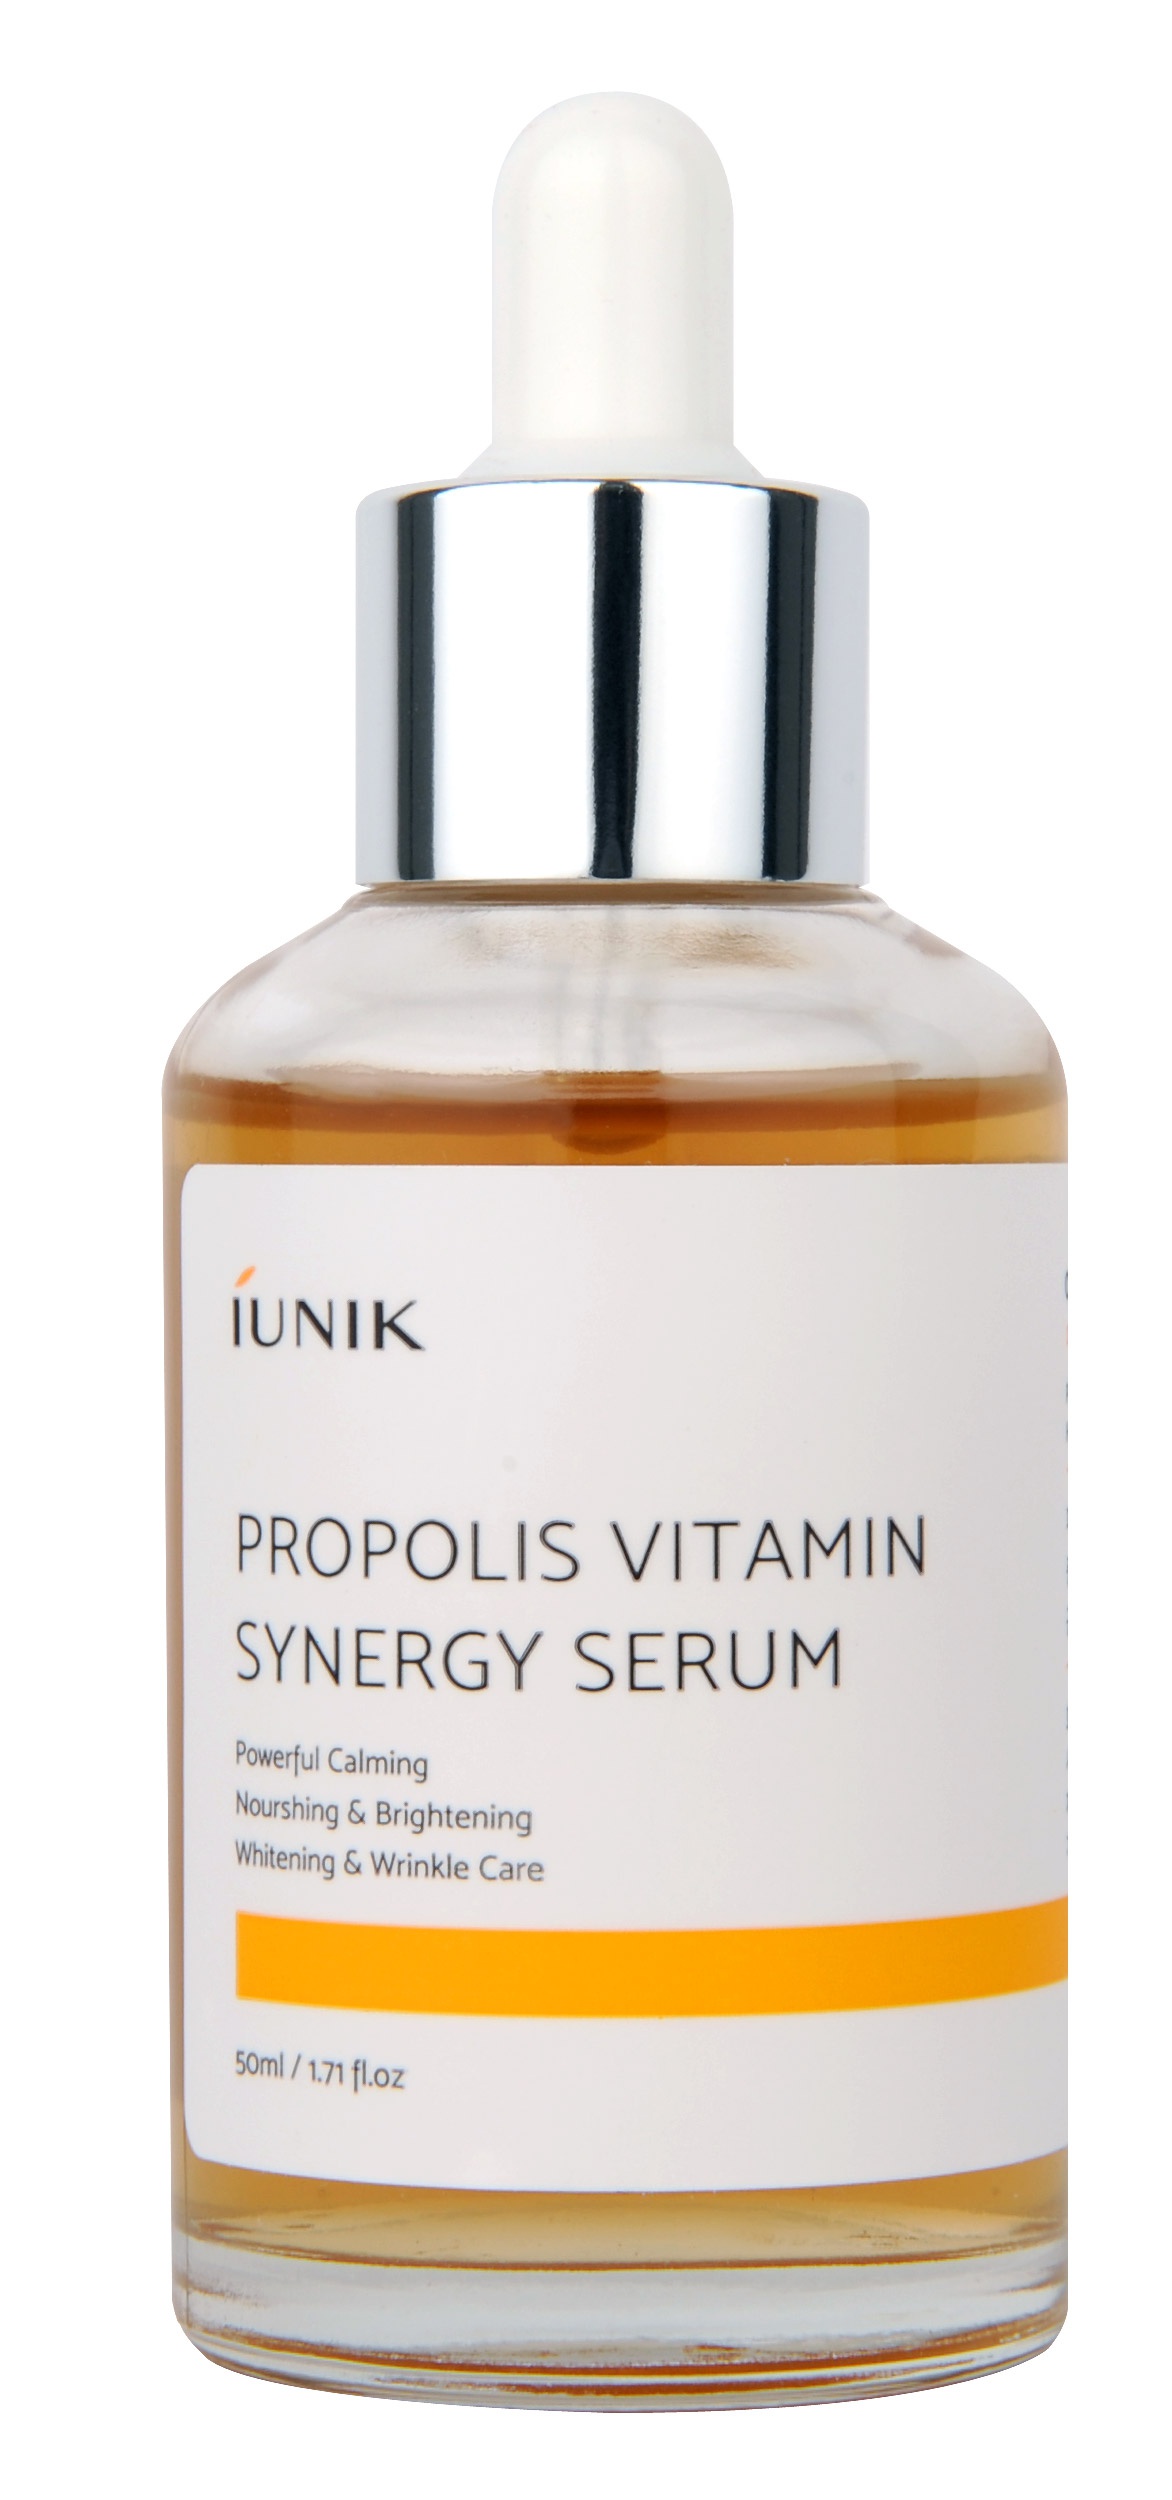 iUnik Propolis Vitamin Synergy Serum